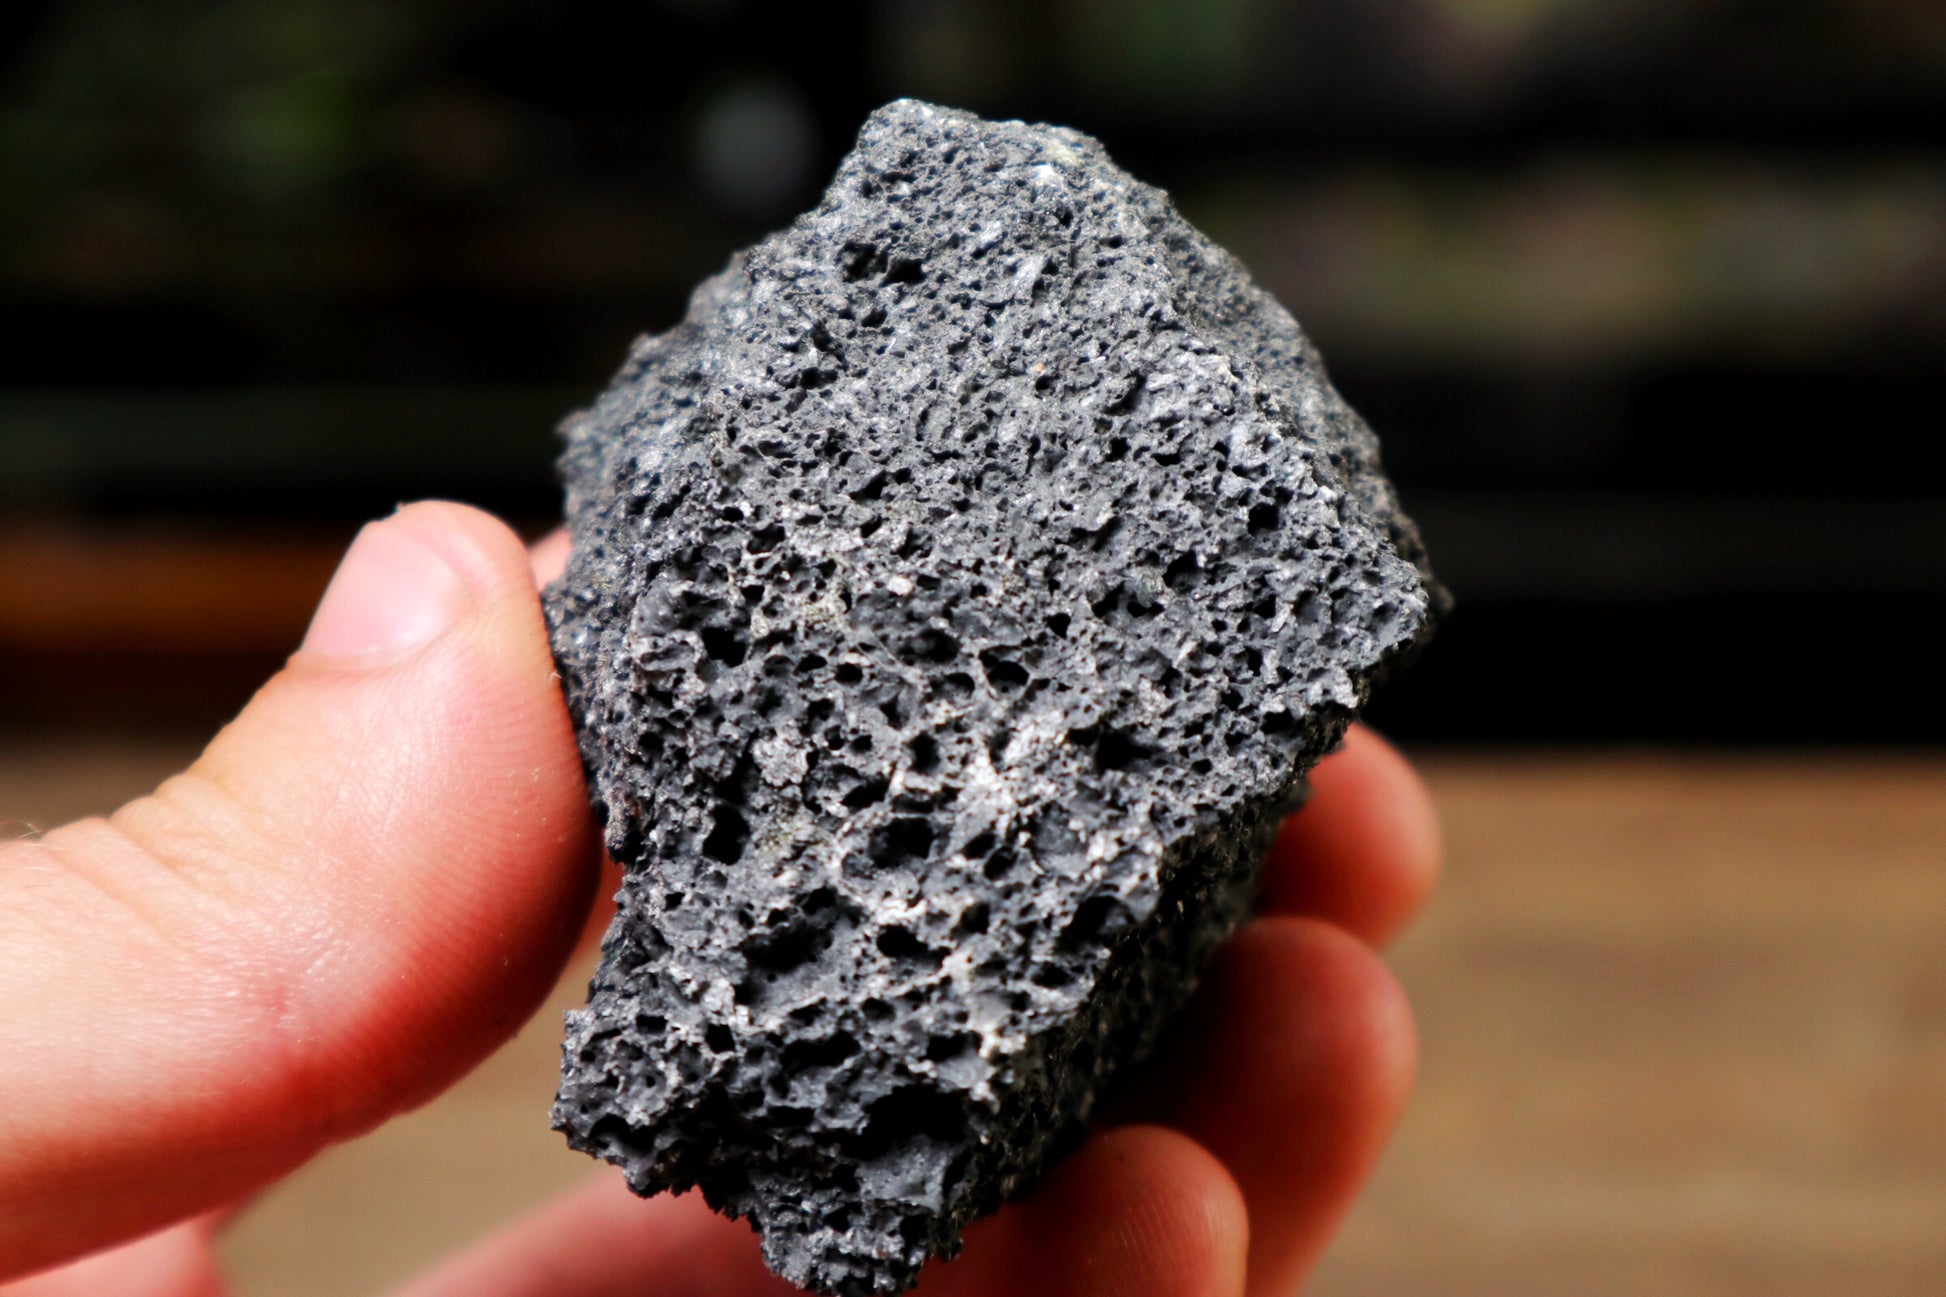 Black Lava Rock Medium (For 1 litre terrarium) (UK Delivery Only) - Terrarium Designs